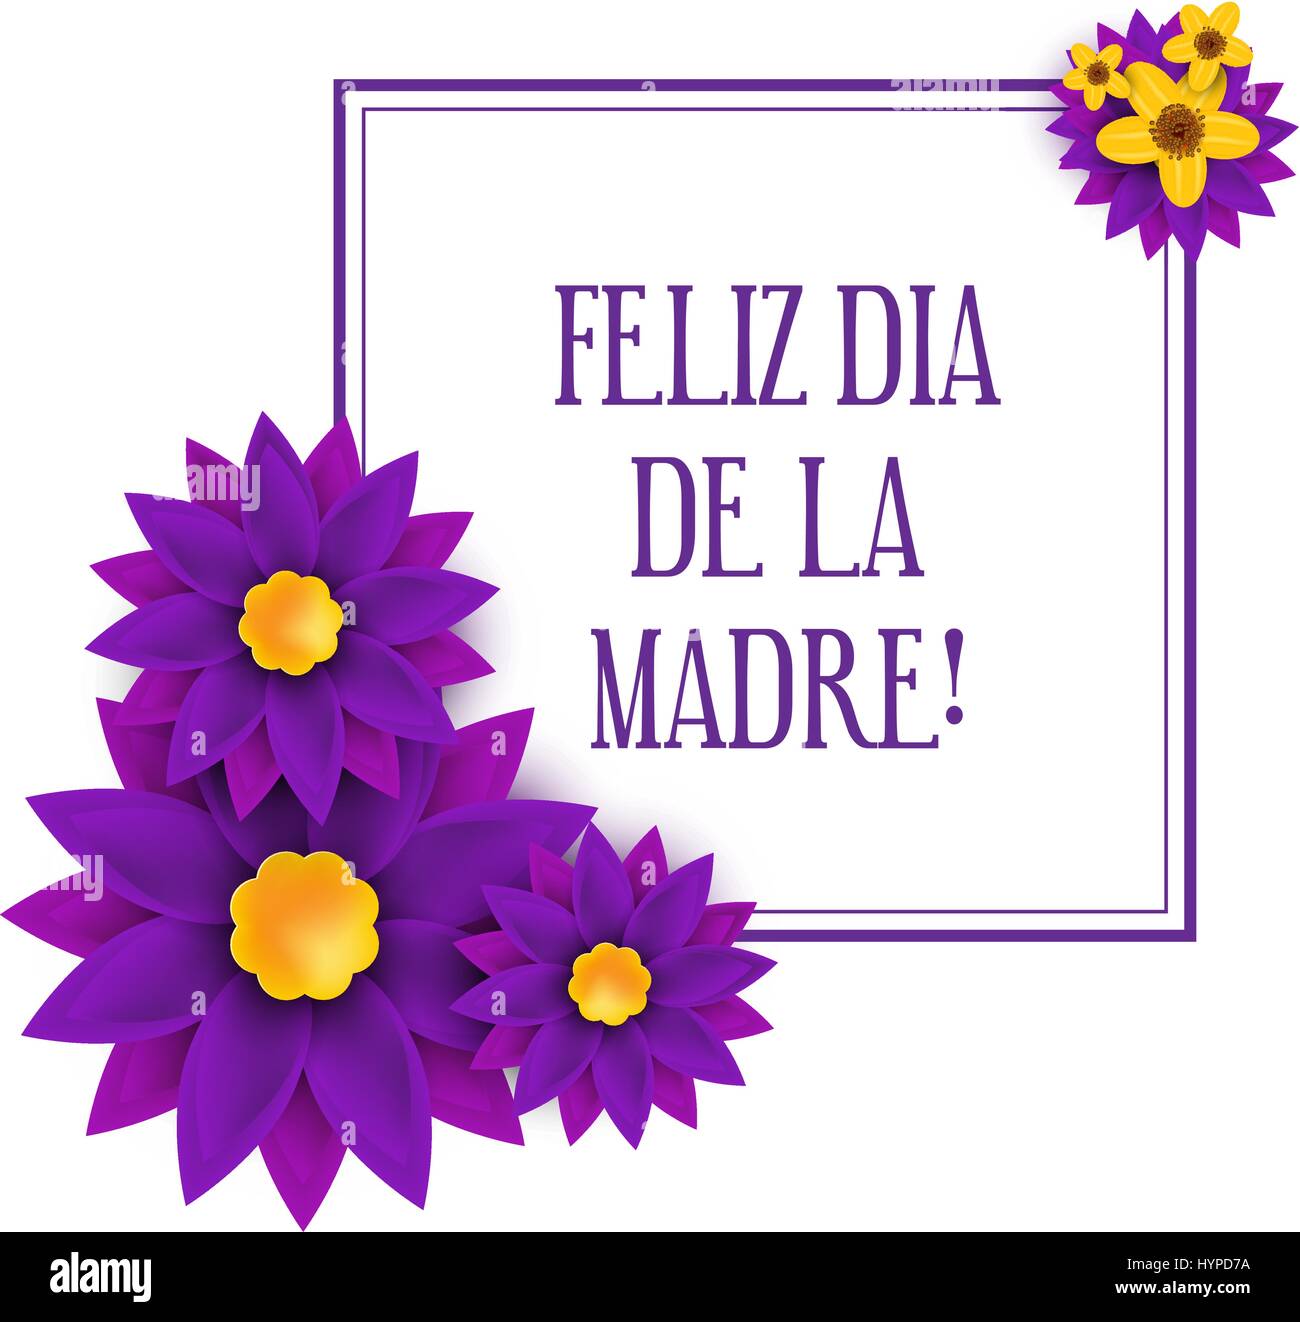 Feliz Dia De La Madre Gluckliche Mutter S Tag In Spanischer Sprache Stock Vektorgrafik Alamy